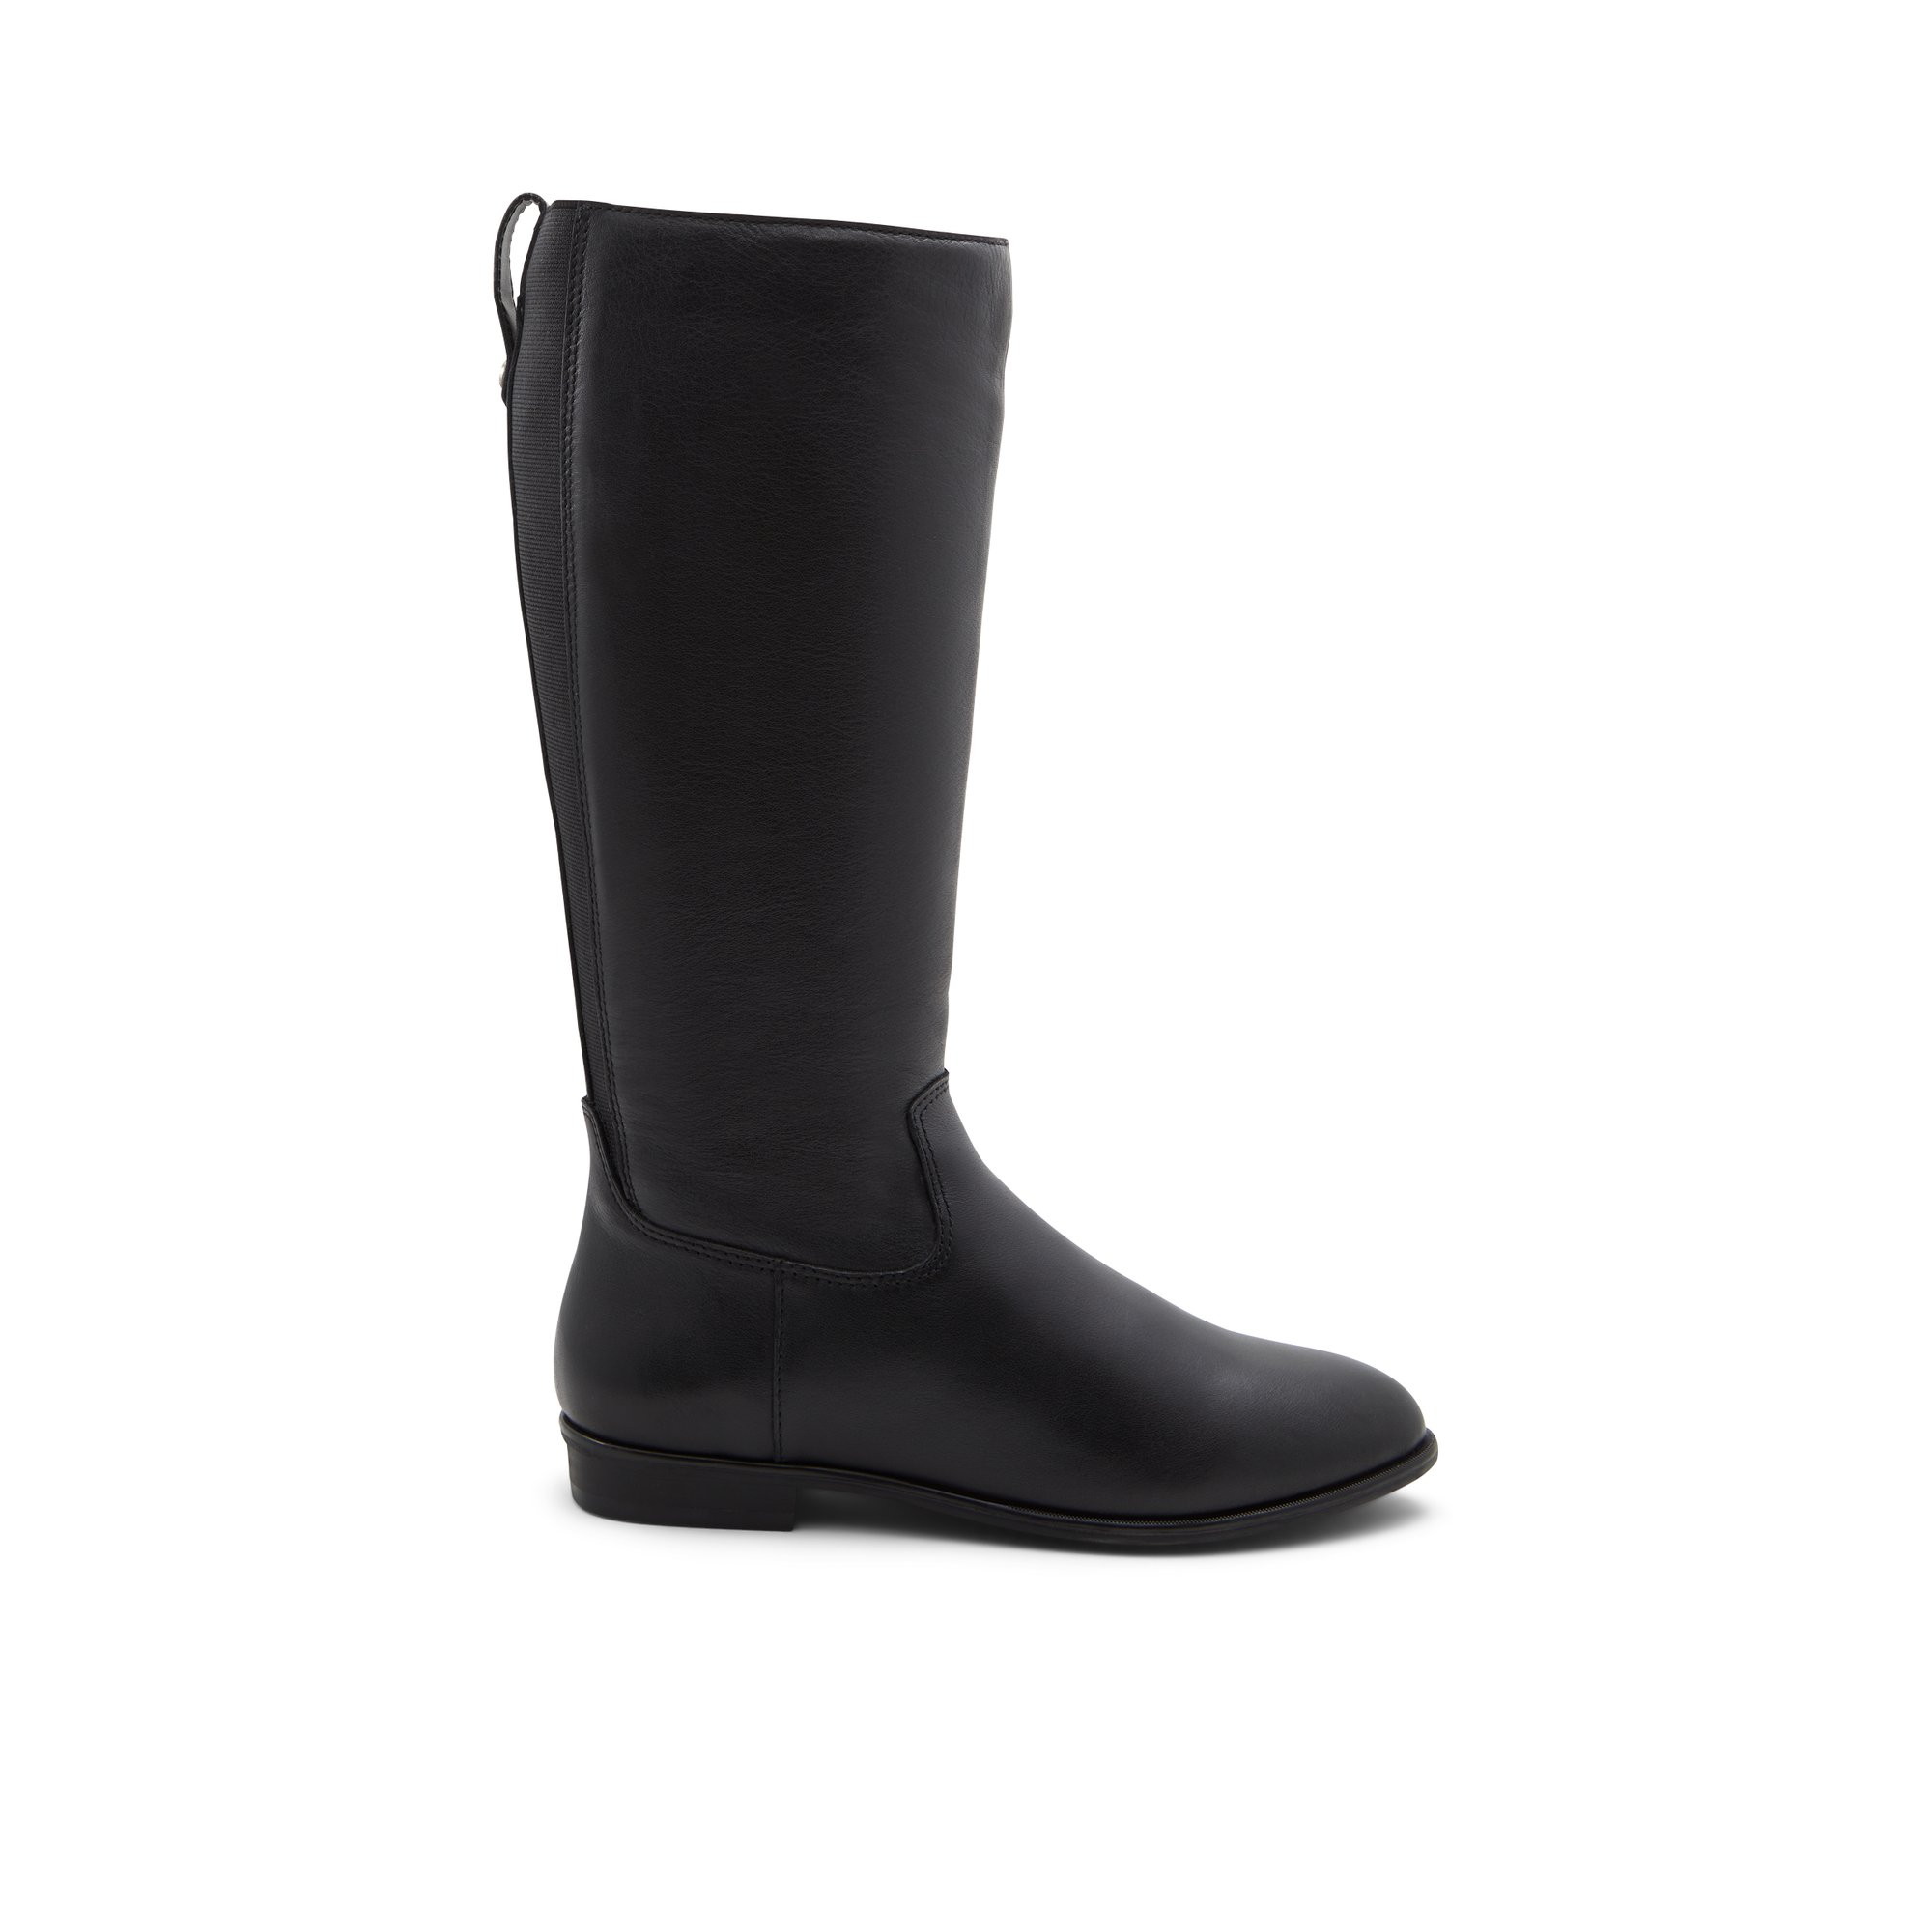 ALDO Riraven-wc - Women's Boots Tall - Black